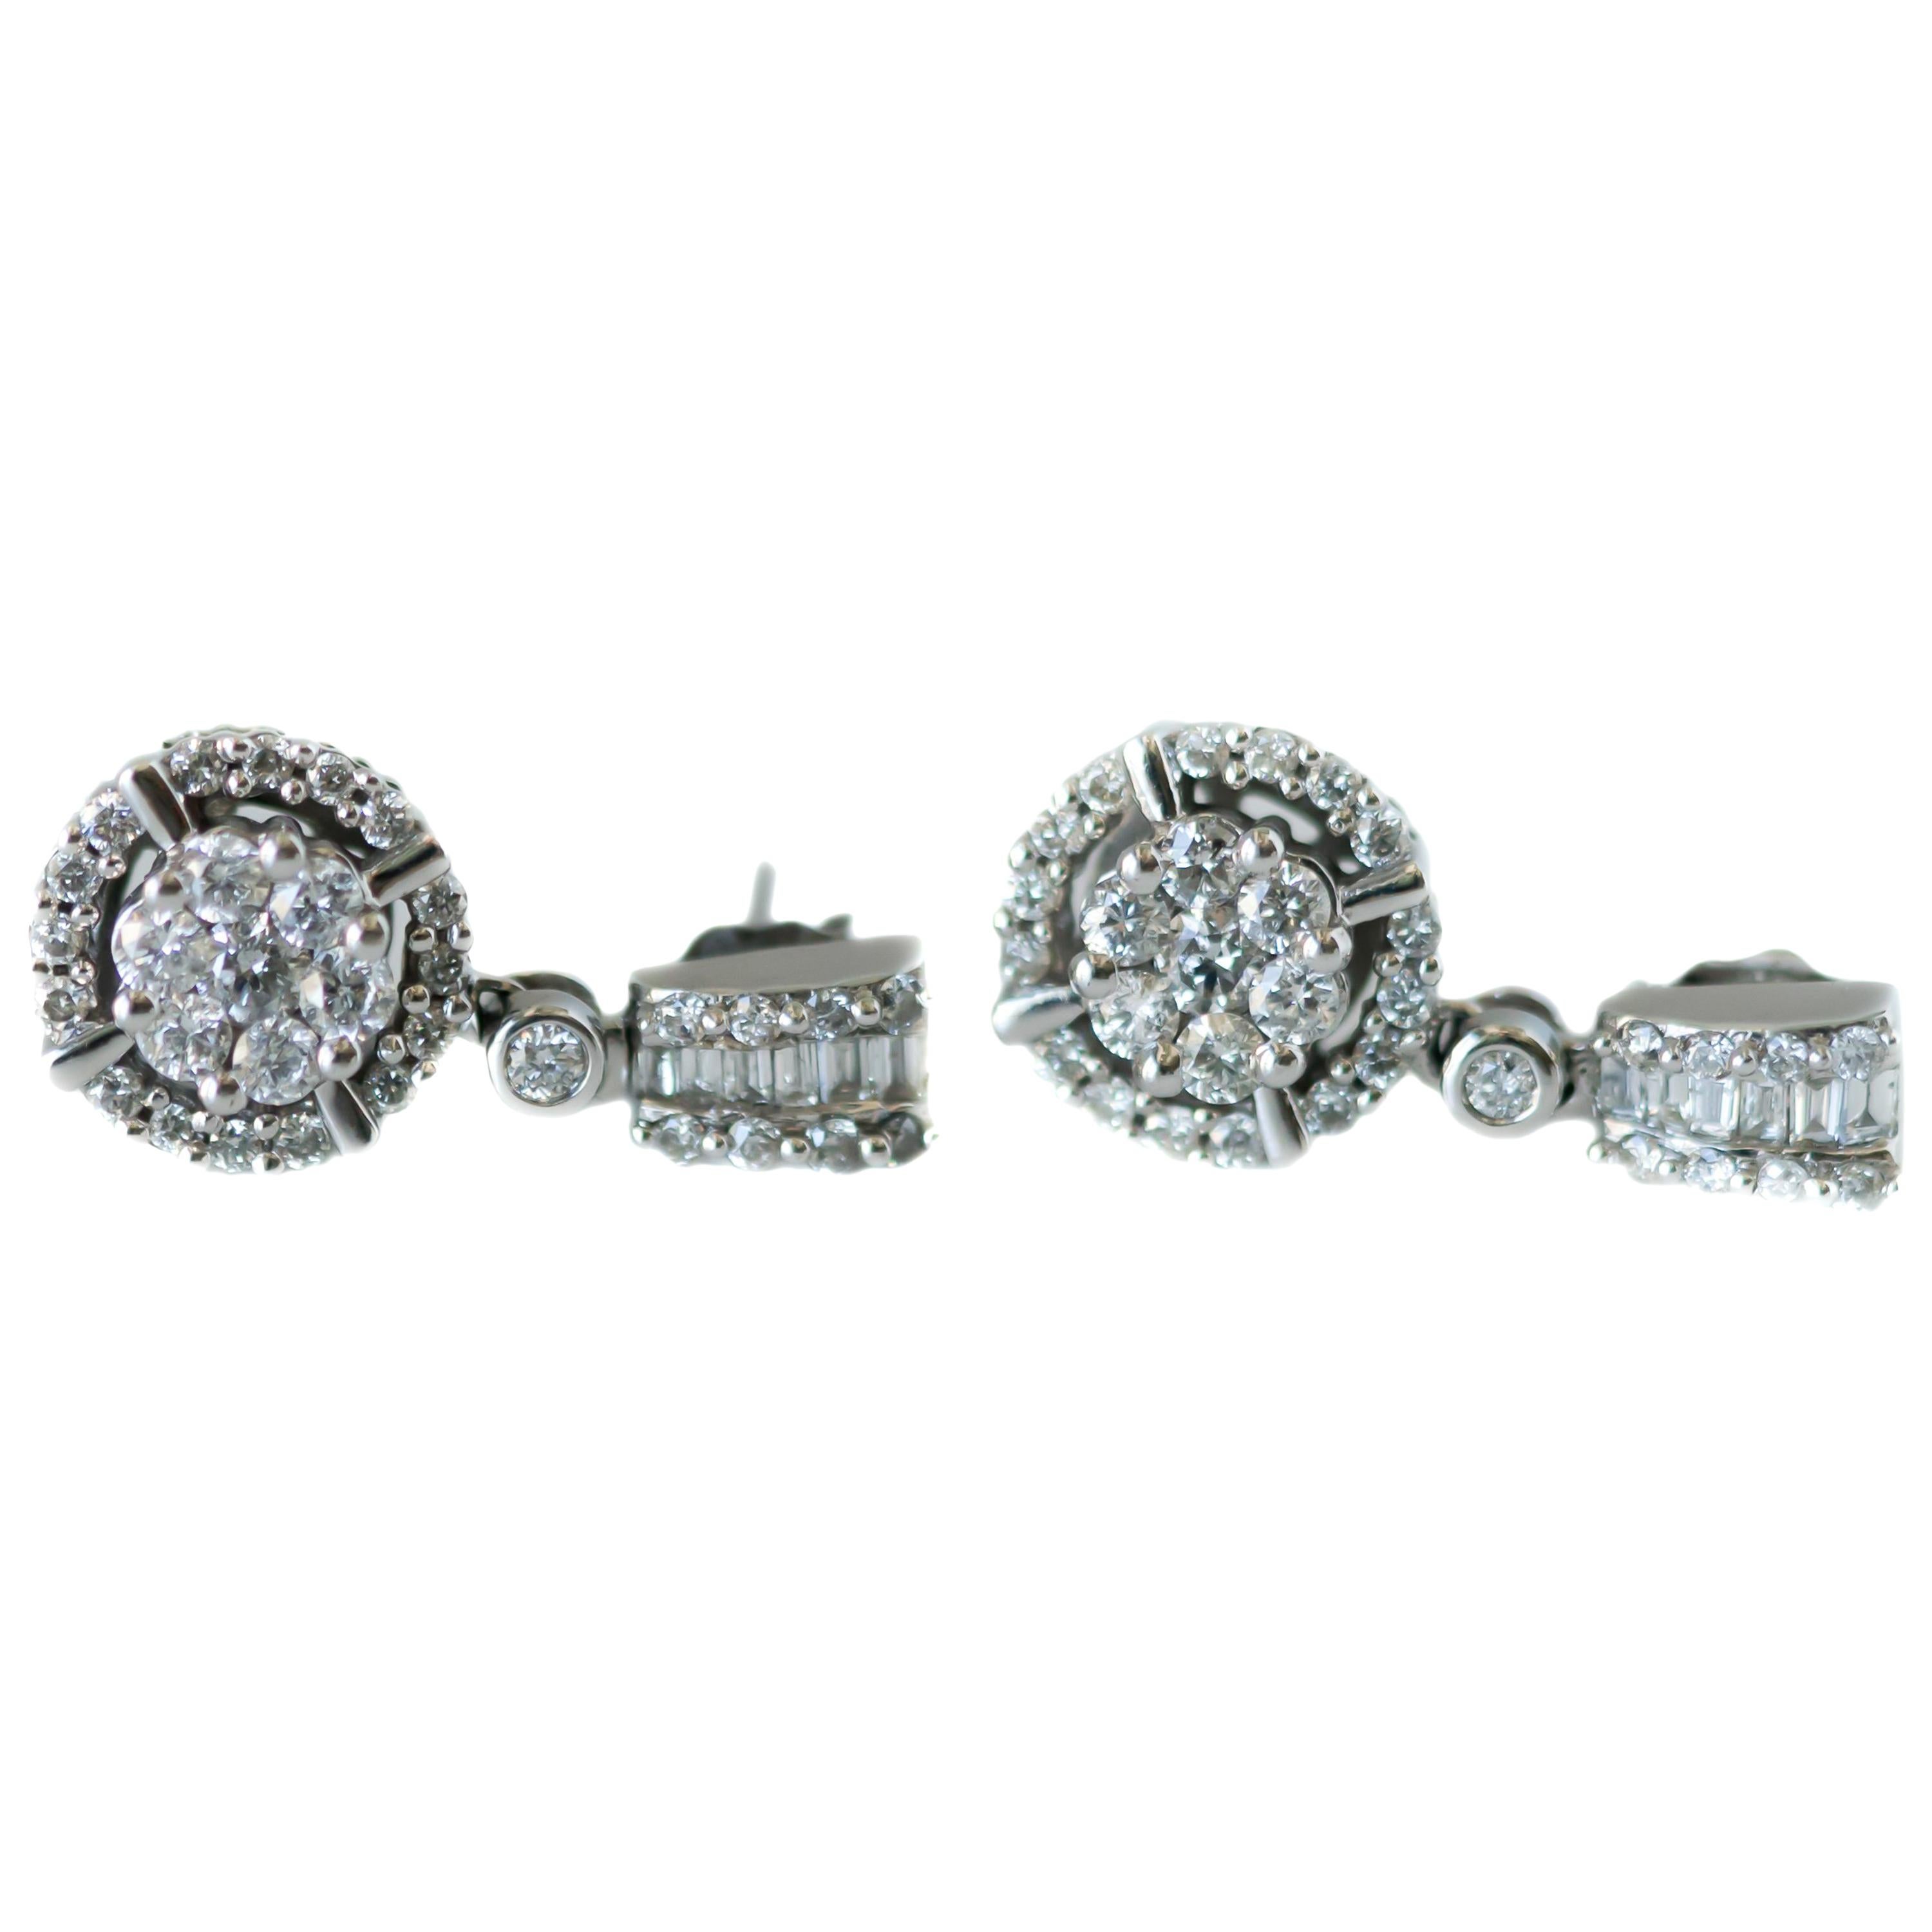 1 Carat Total Diamond Drop Earrings in 14 Karat White Gold